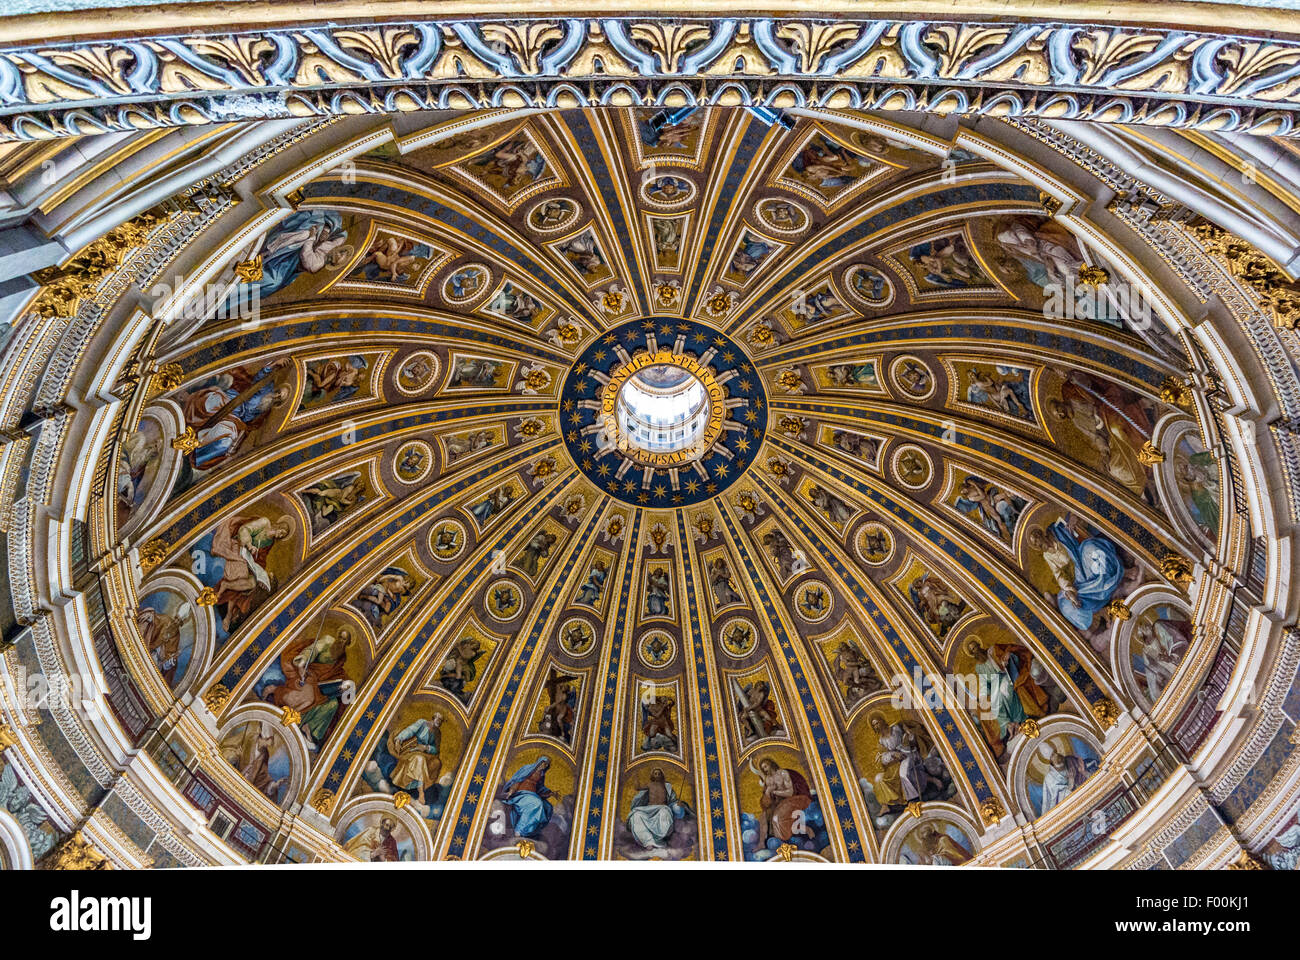 Dome interior. St. Peter's Basilica, Vatican City. Rome. Italy. Stock Photo